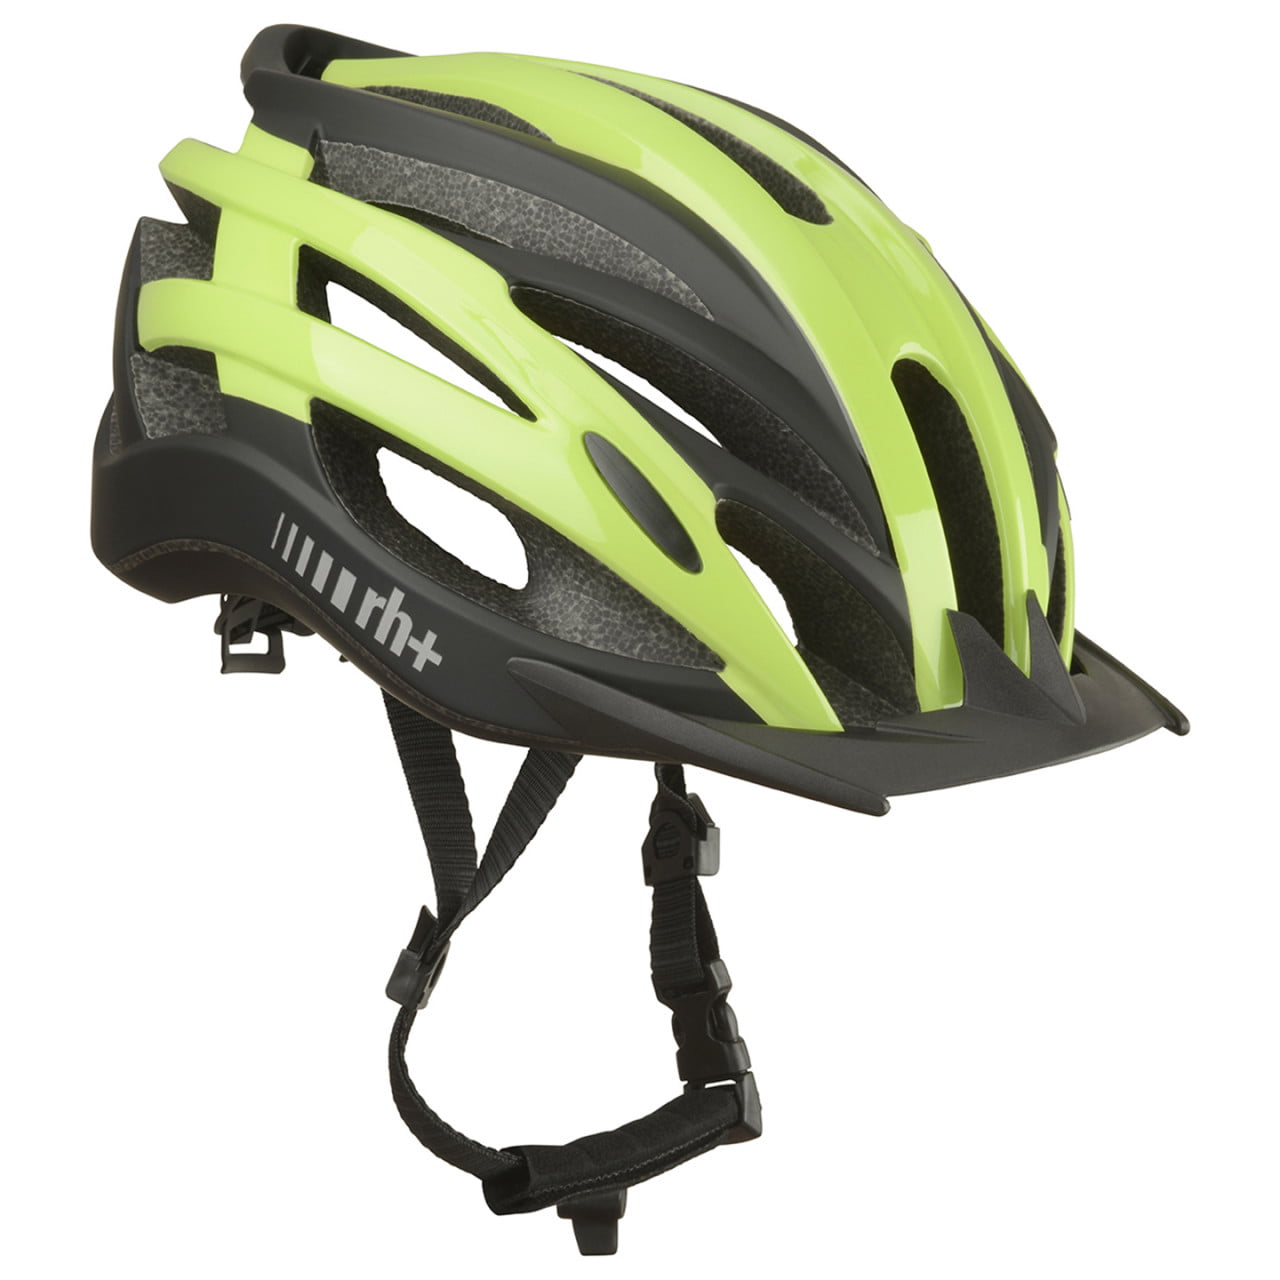 rh+ Z 2in1 Road Bike Helmet